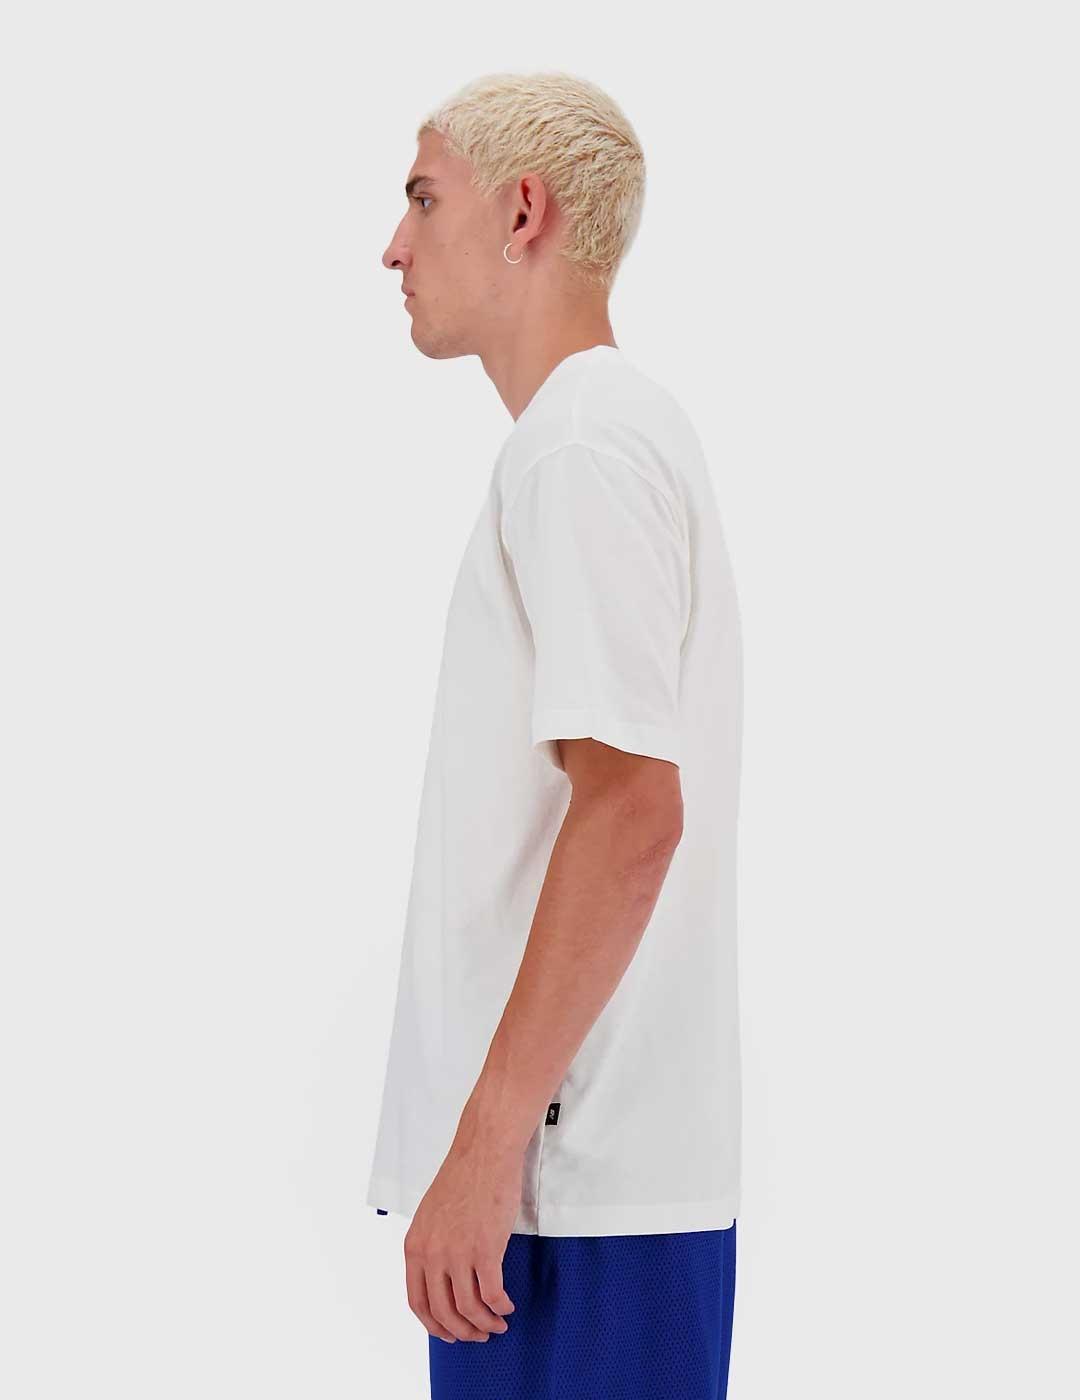 Camiseta New Balance Athletics Baseball blanca para hombre